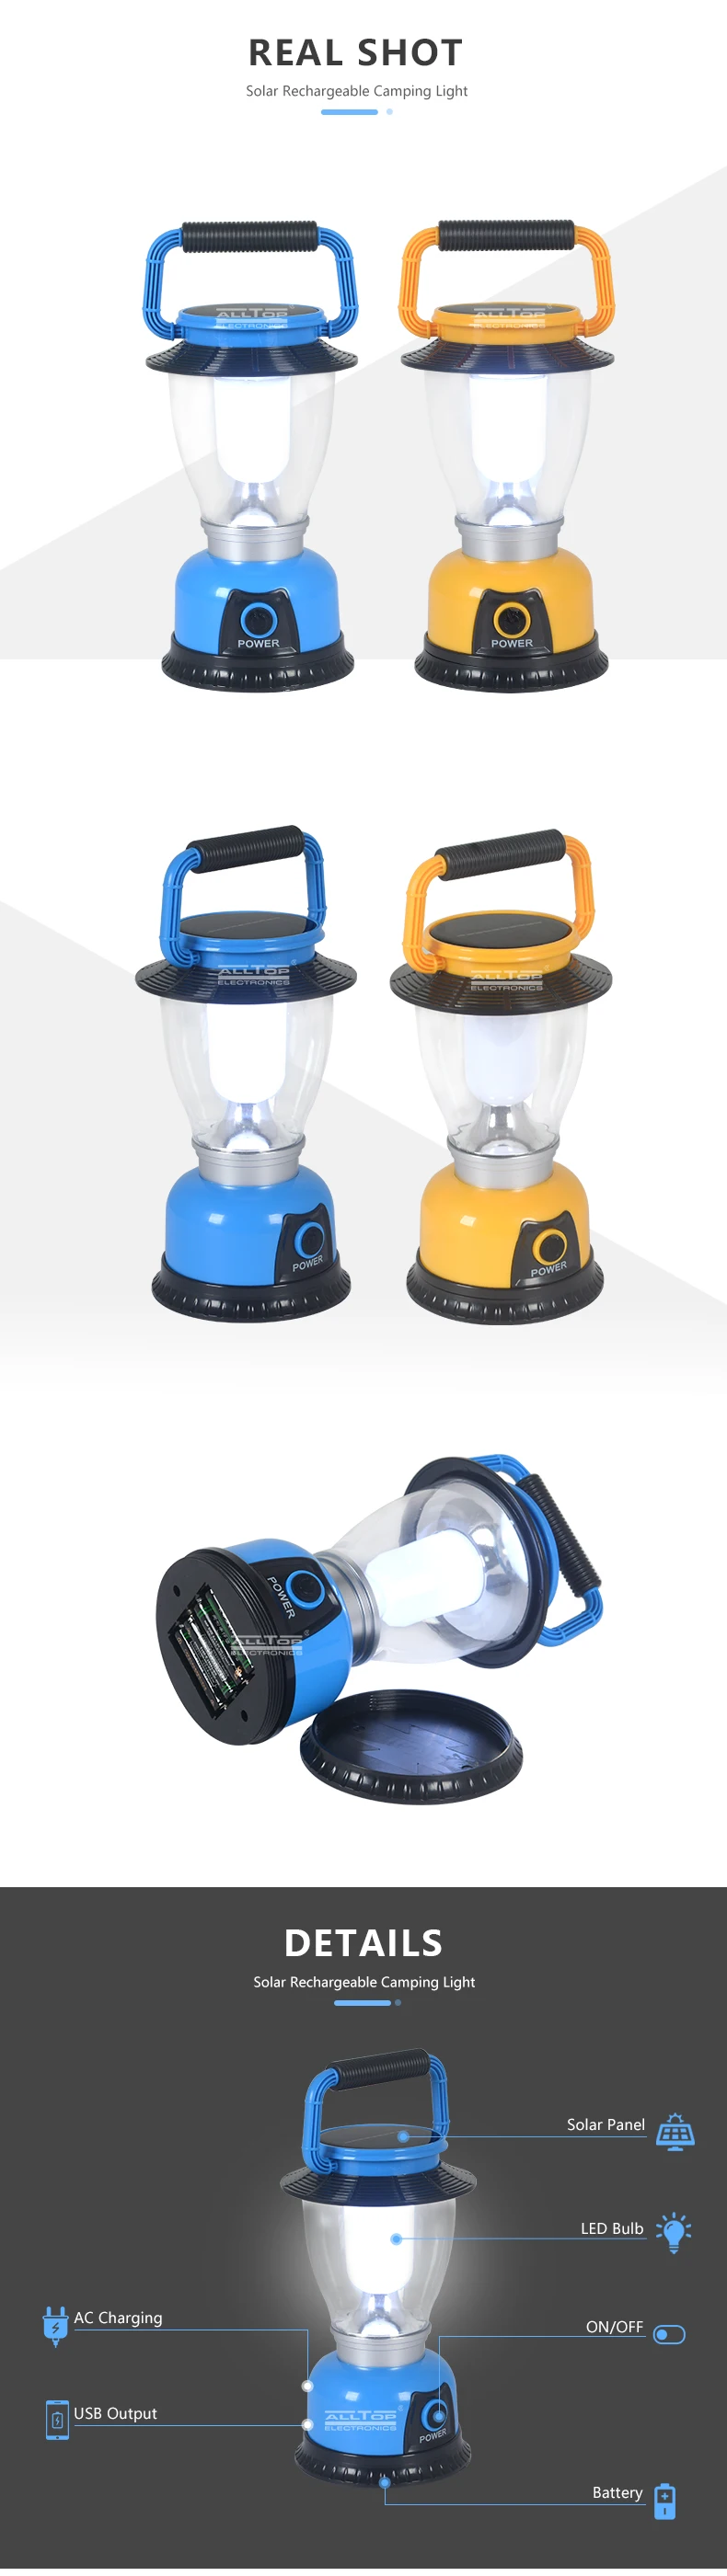 ALLTOP Hot selling 6 LED Rechargeable Solar led Lantern solar led camping light